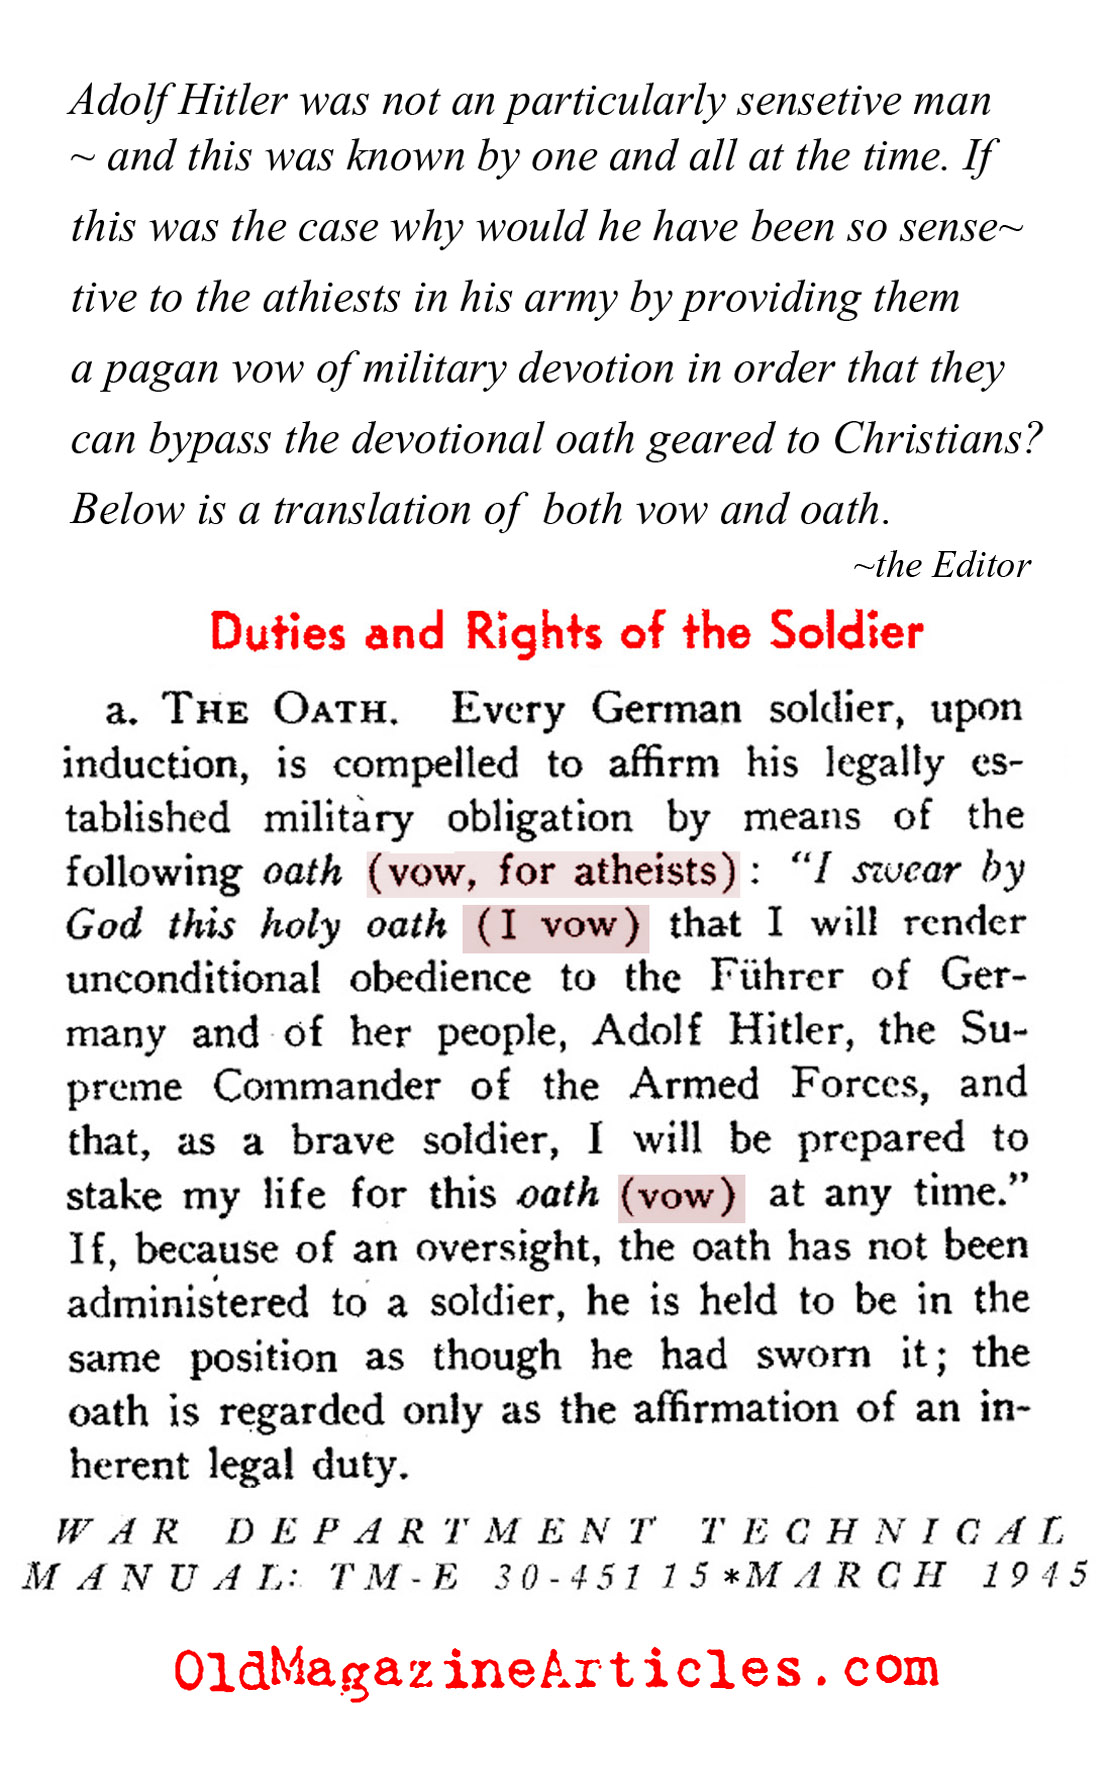 Atheist or Christian? (U.S. Dept. of War, 1945)